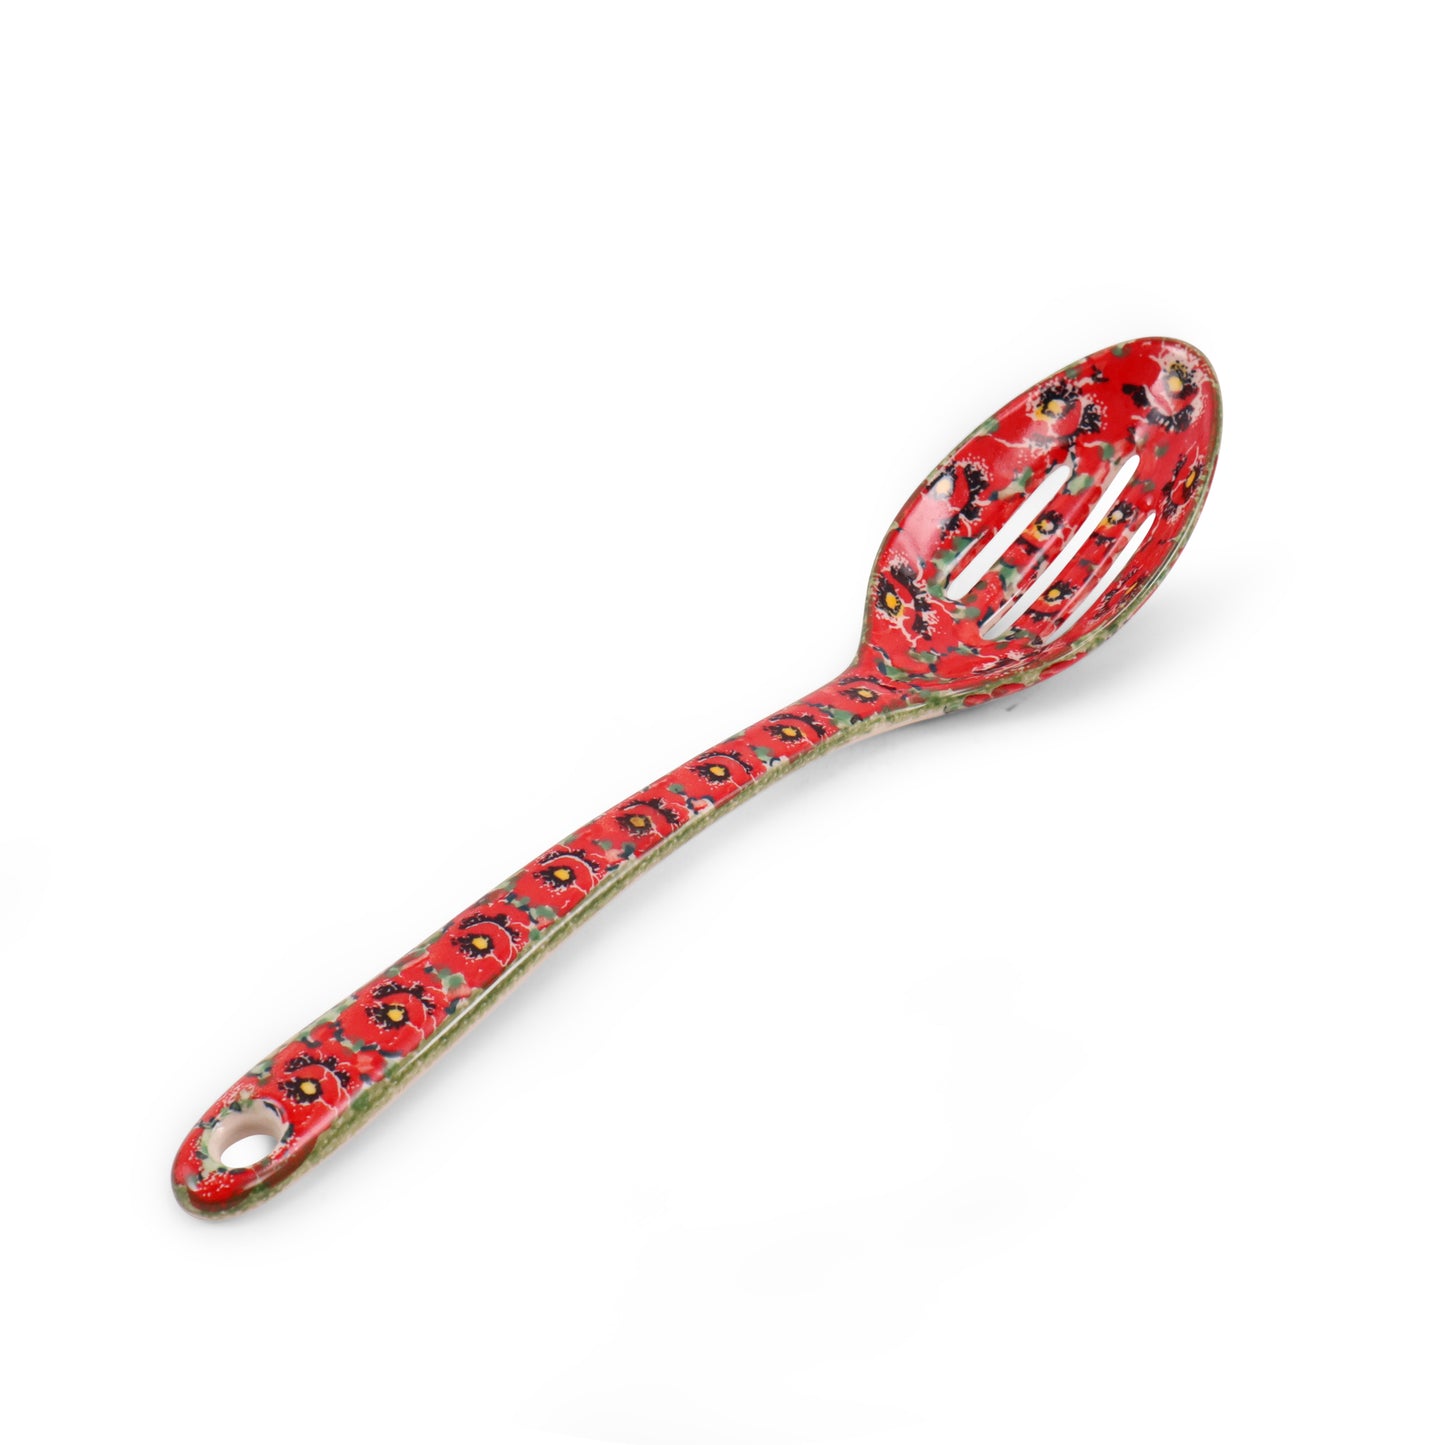 12" Slotted Spoon. Pattern: Scarlet Surroundings